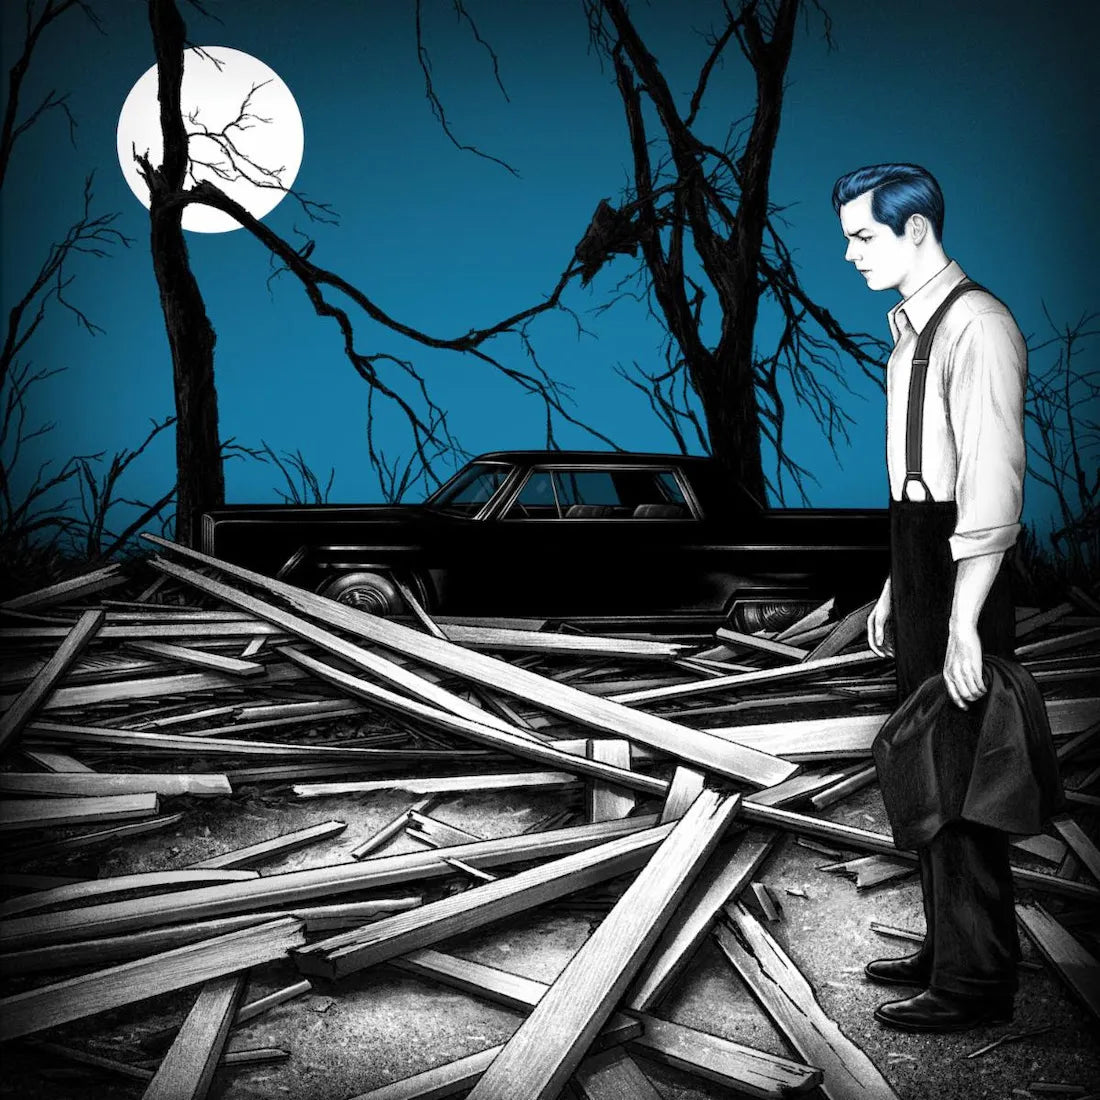  |  Vinyl LP | Jack White - Fear of the Dawn (LP) | Records on Vinyl